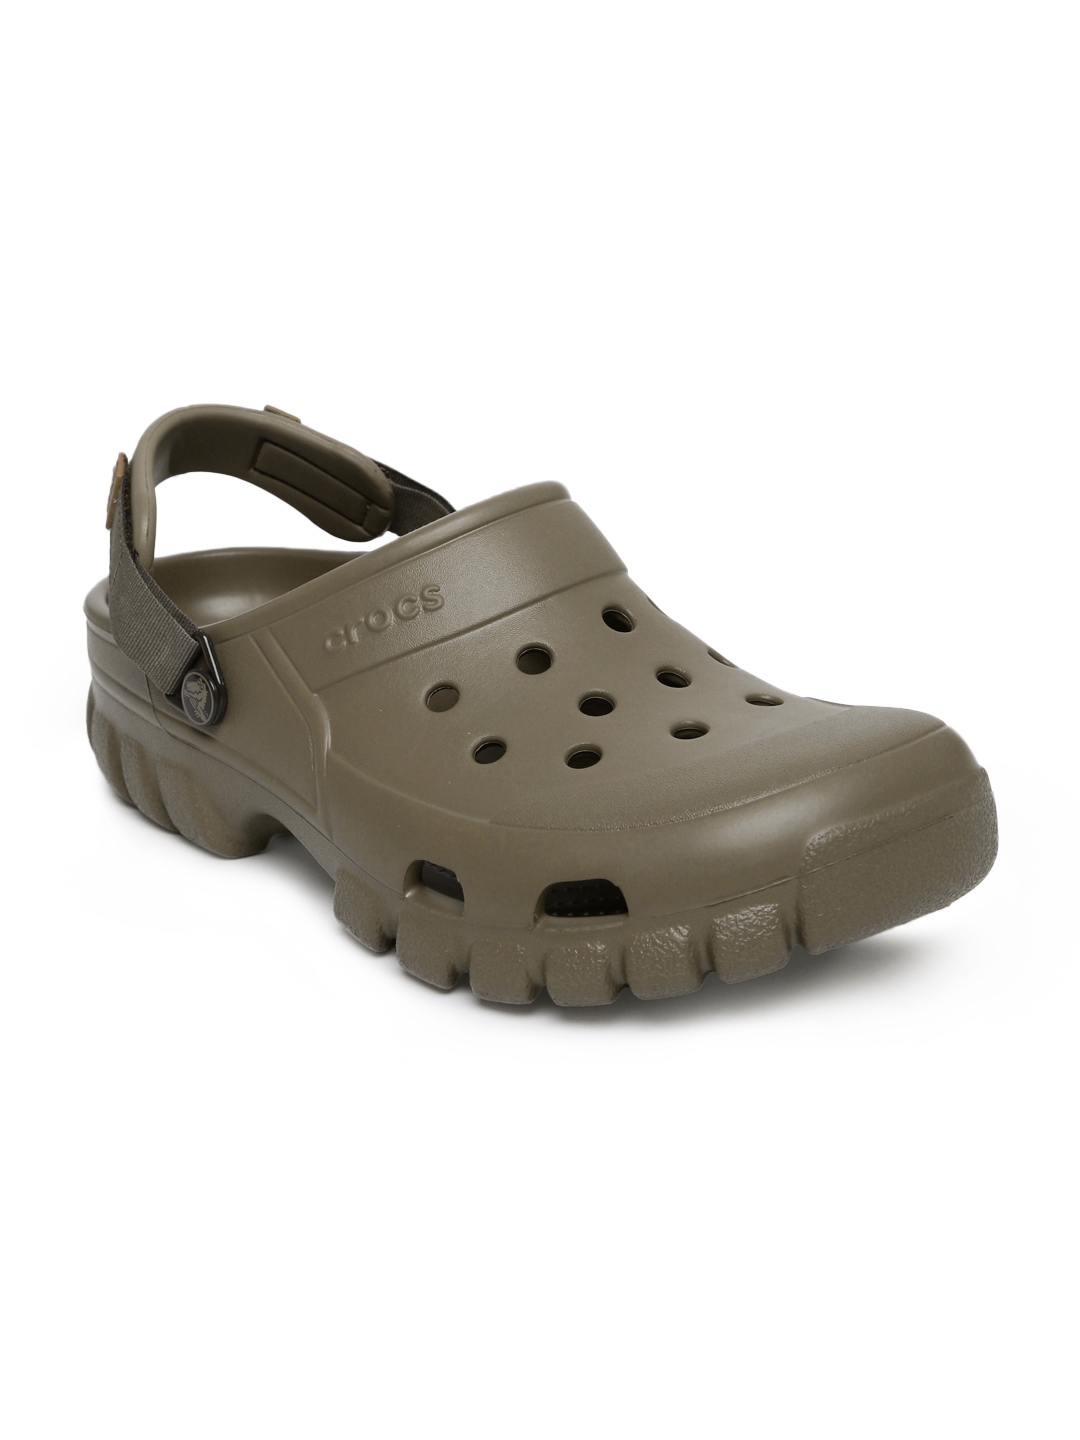 crocs offroad khaki